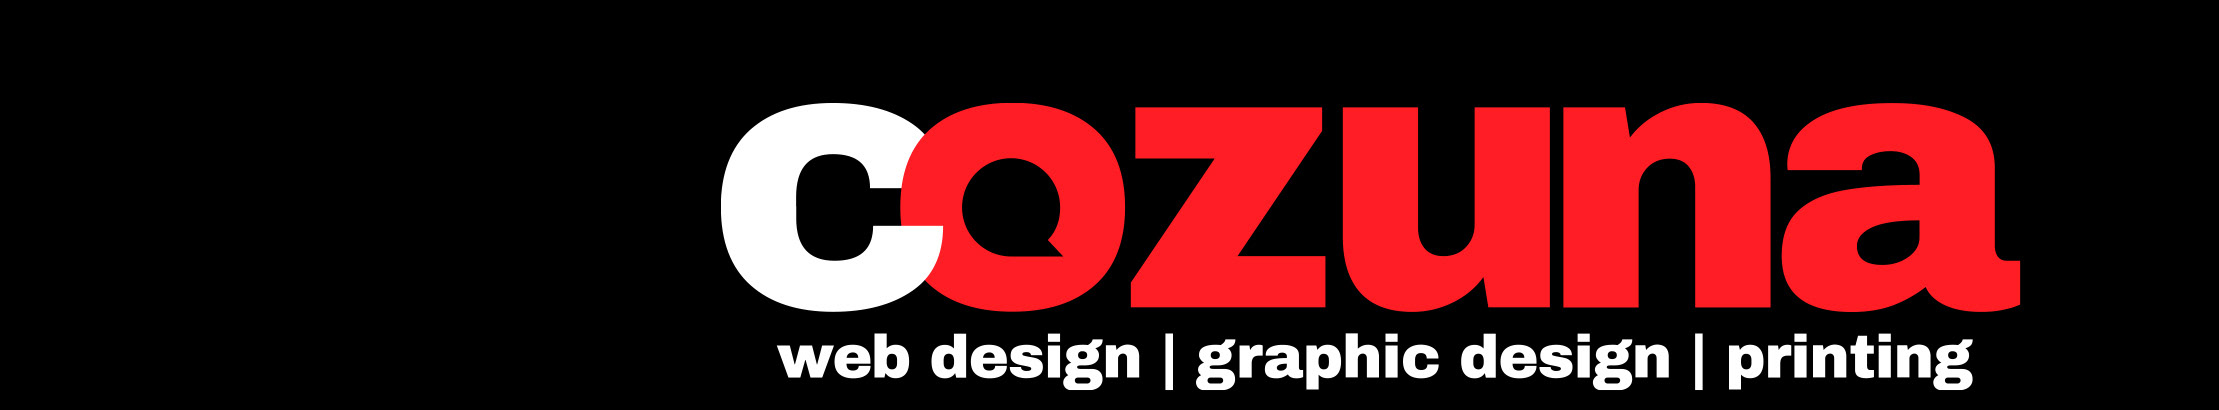 Carlos Ozuna's profile banner